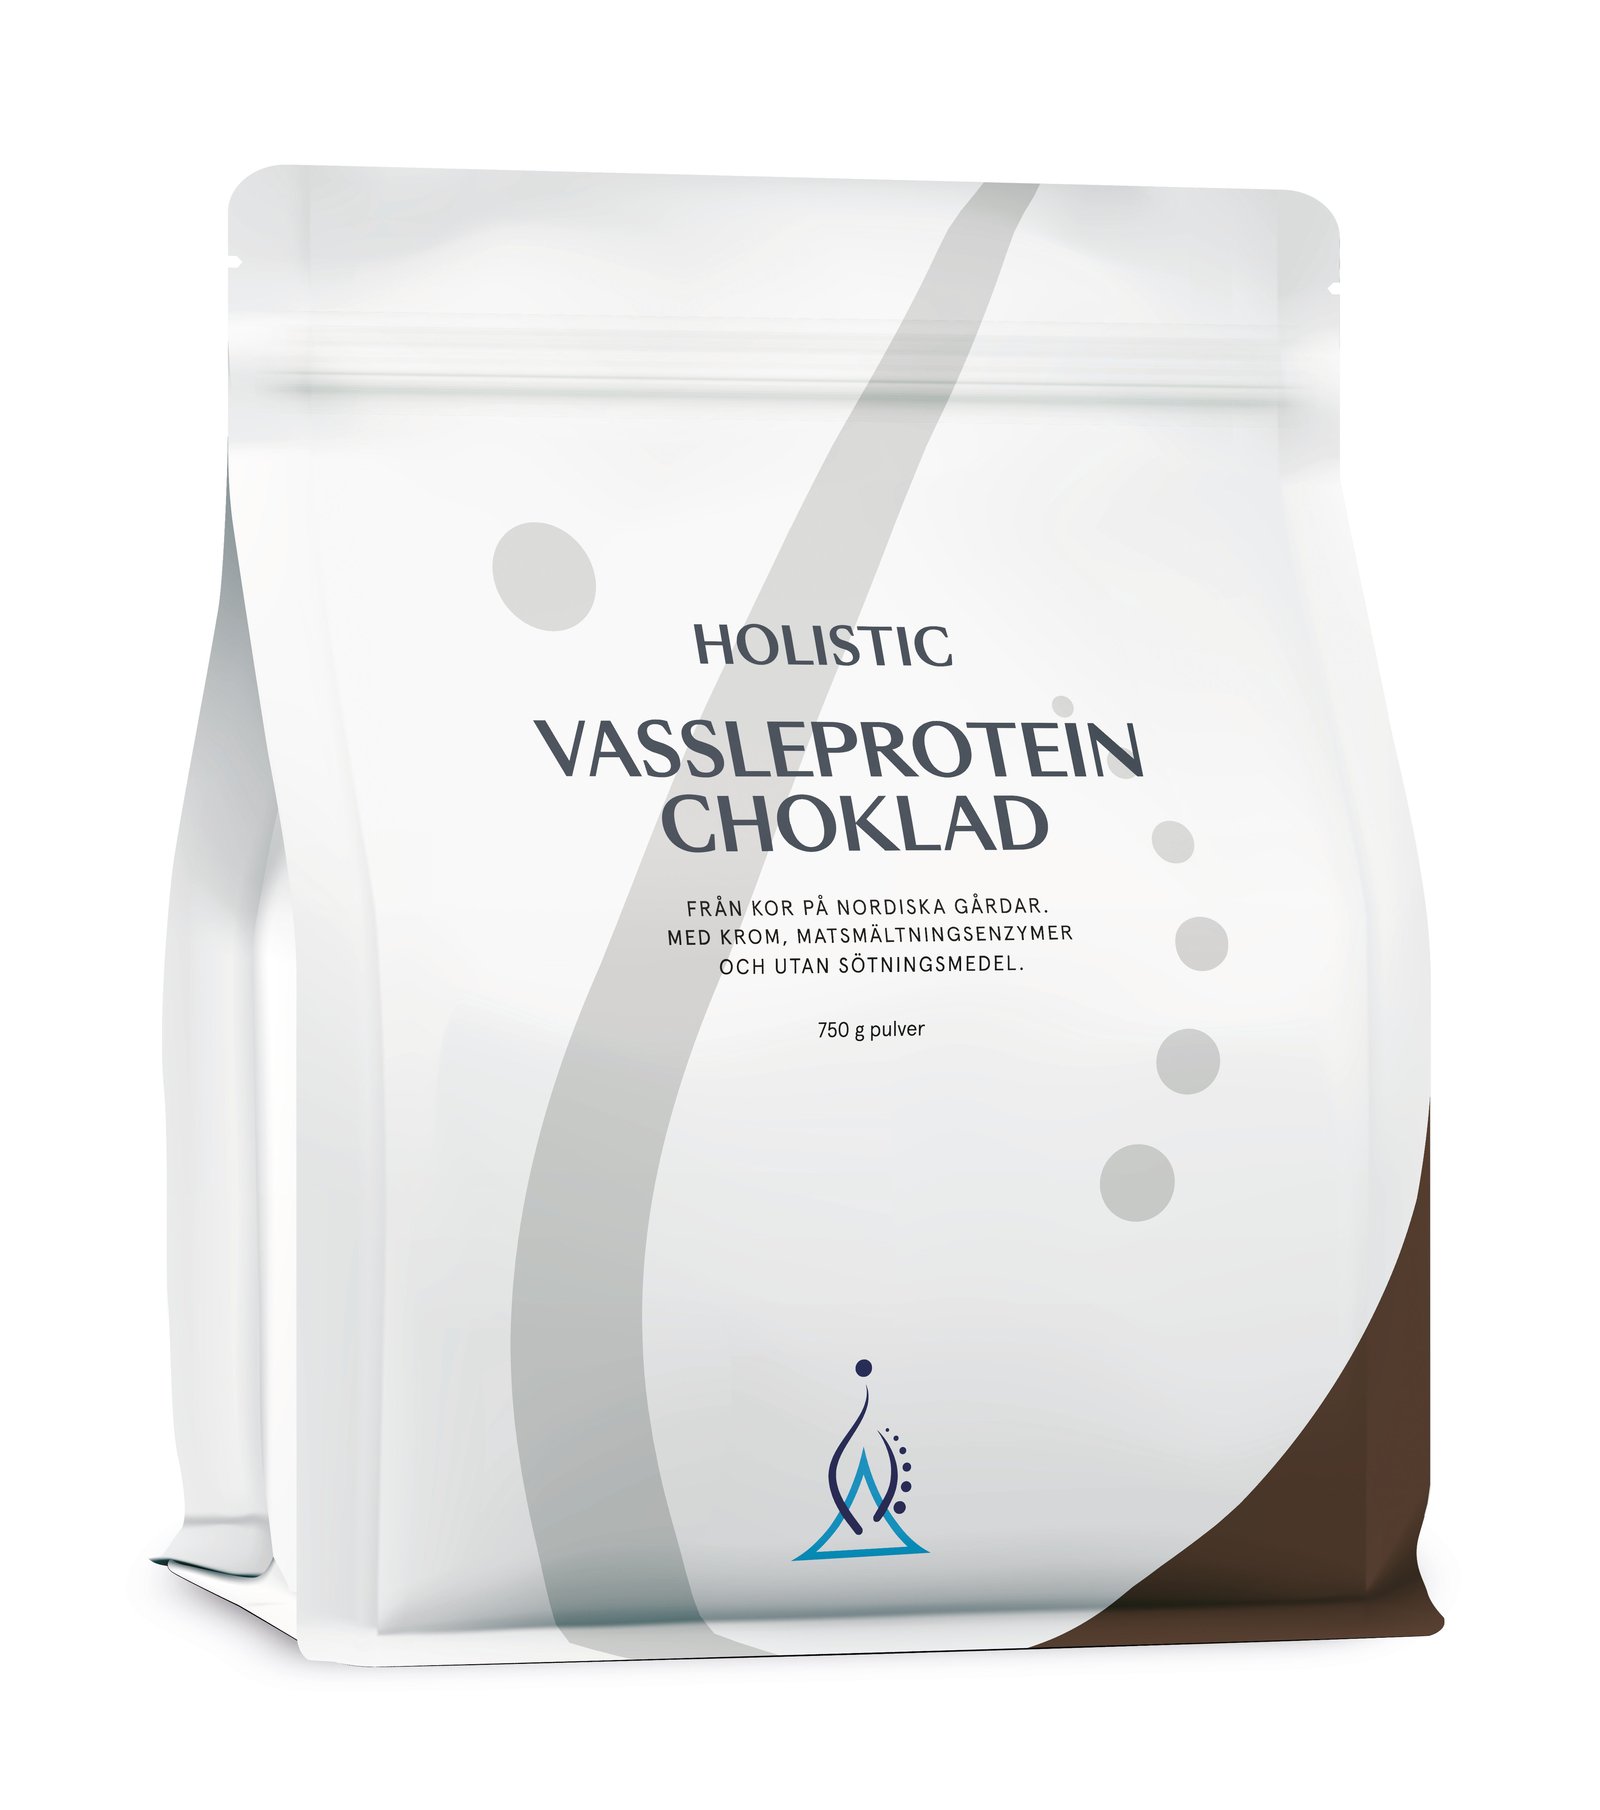 Holistic Vassleprotein Choklad 750g